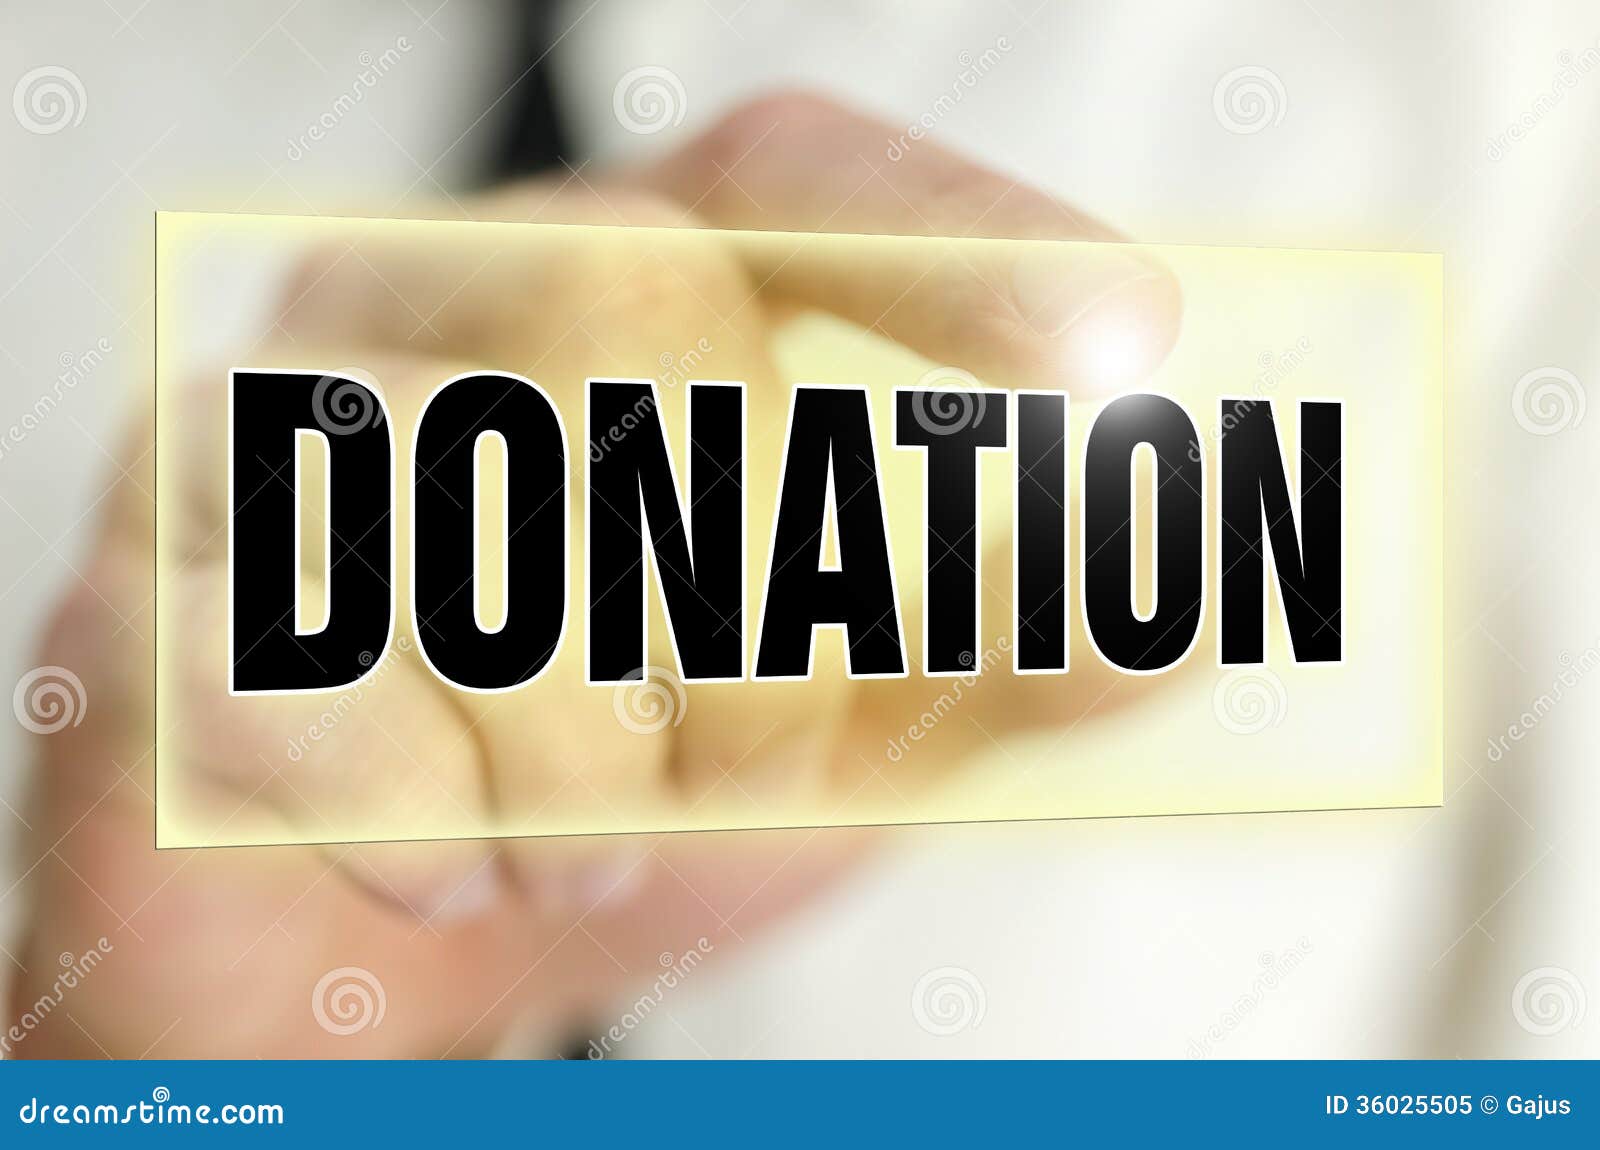 donation button